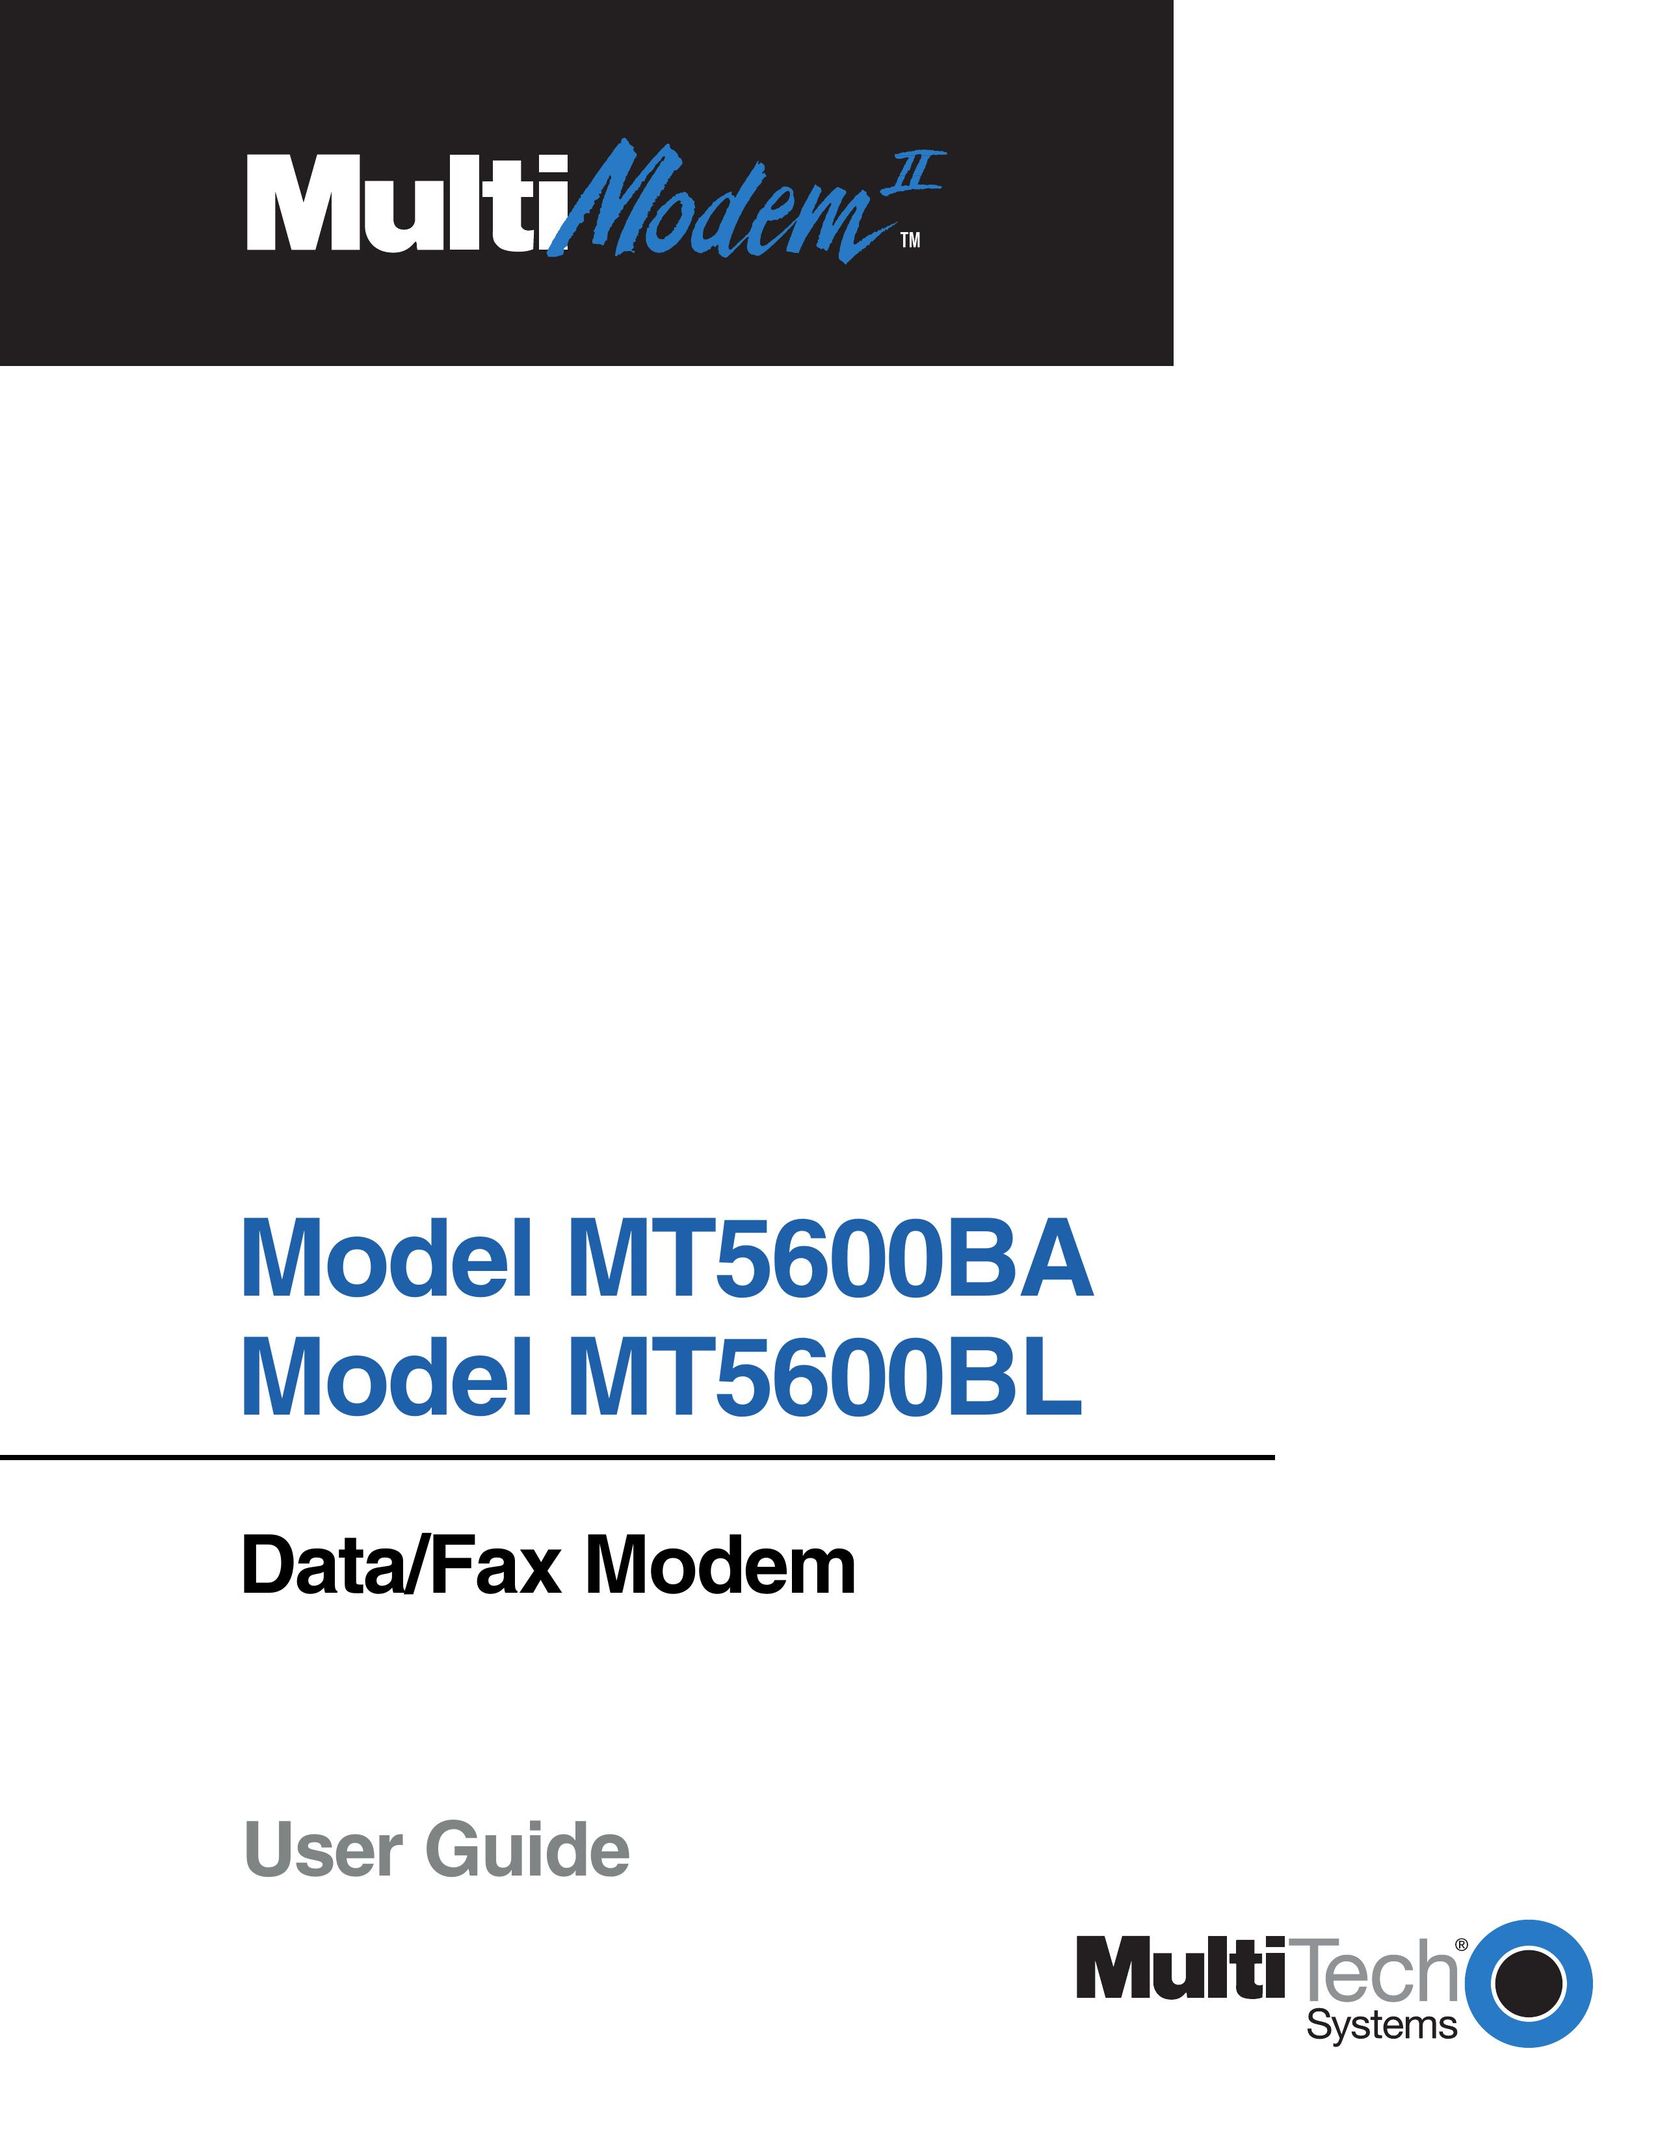 Multi-Tech Systems MT5600BL Modem User Manual